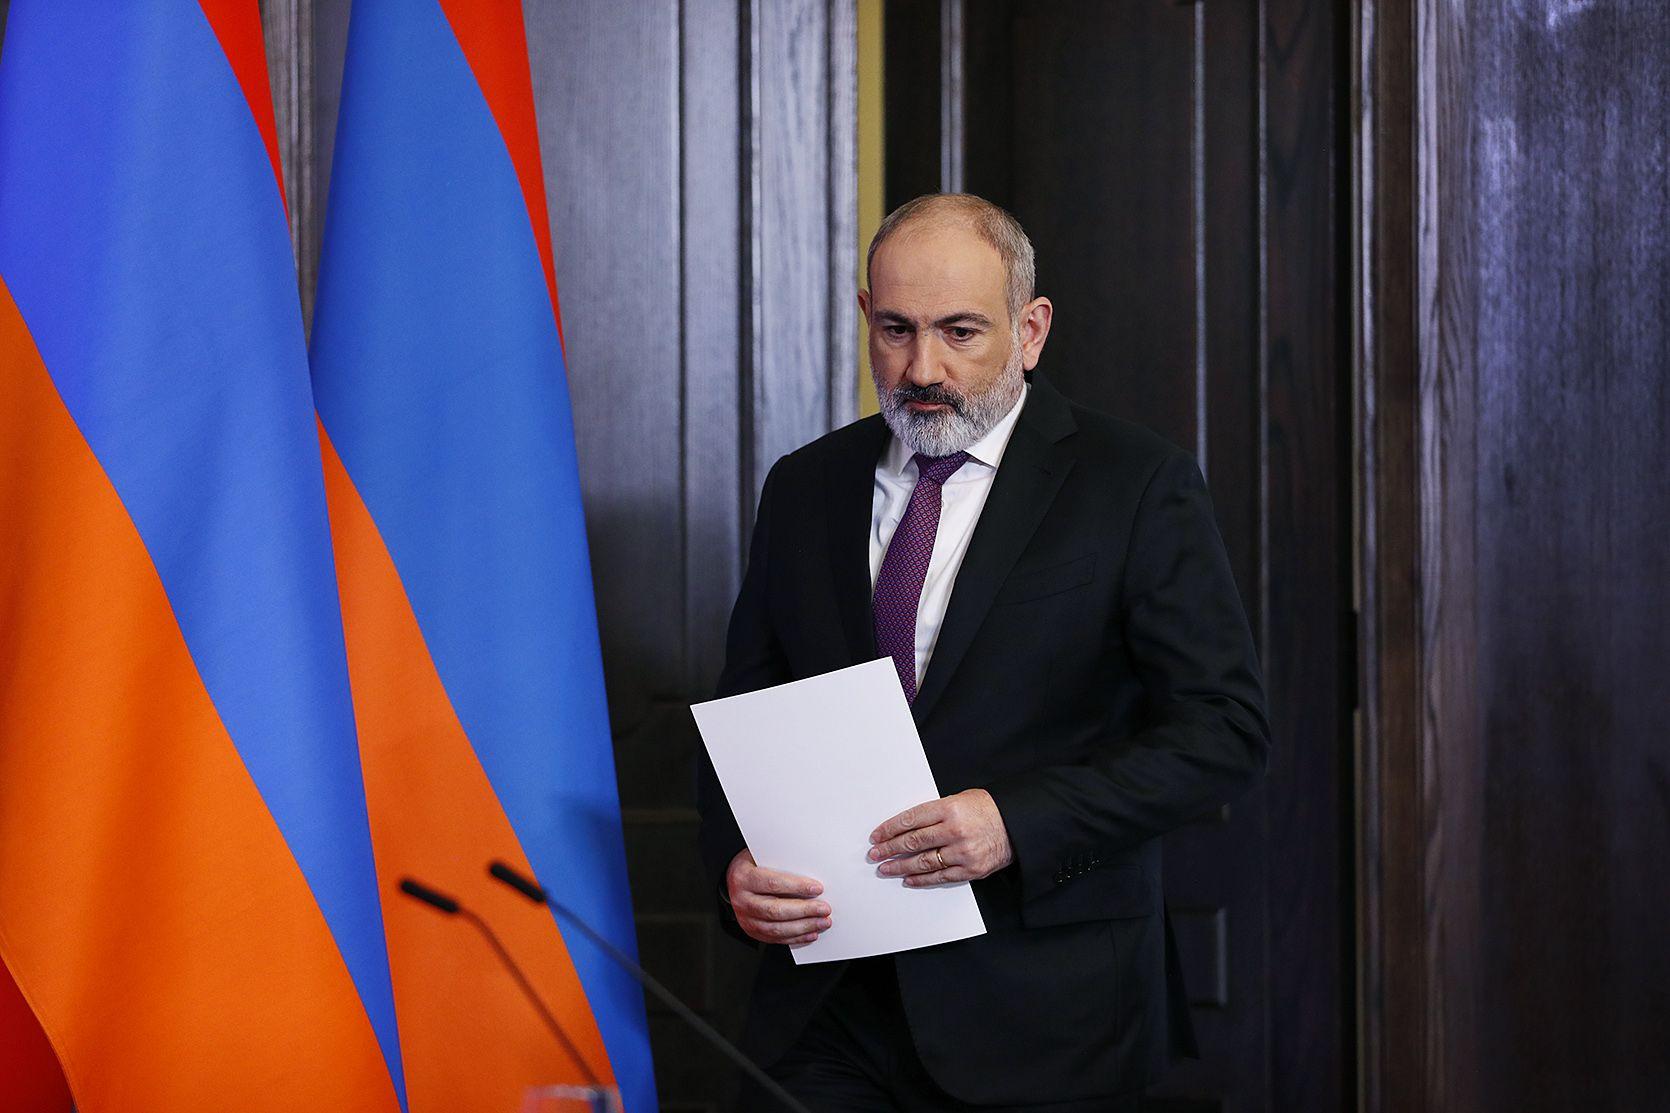 Pashinyan: Armenia not considering entry into NATO